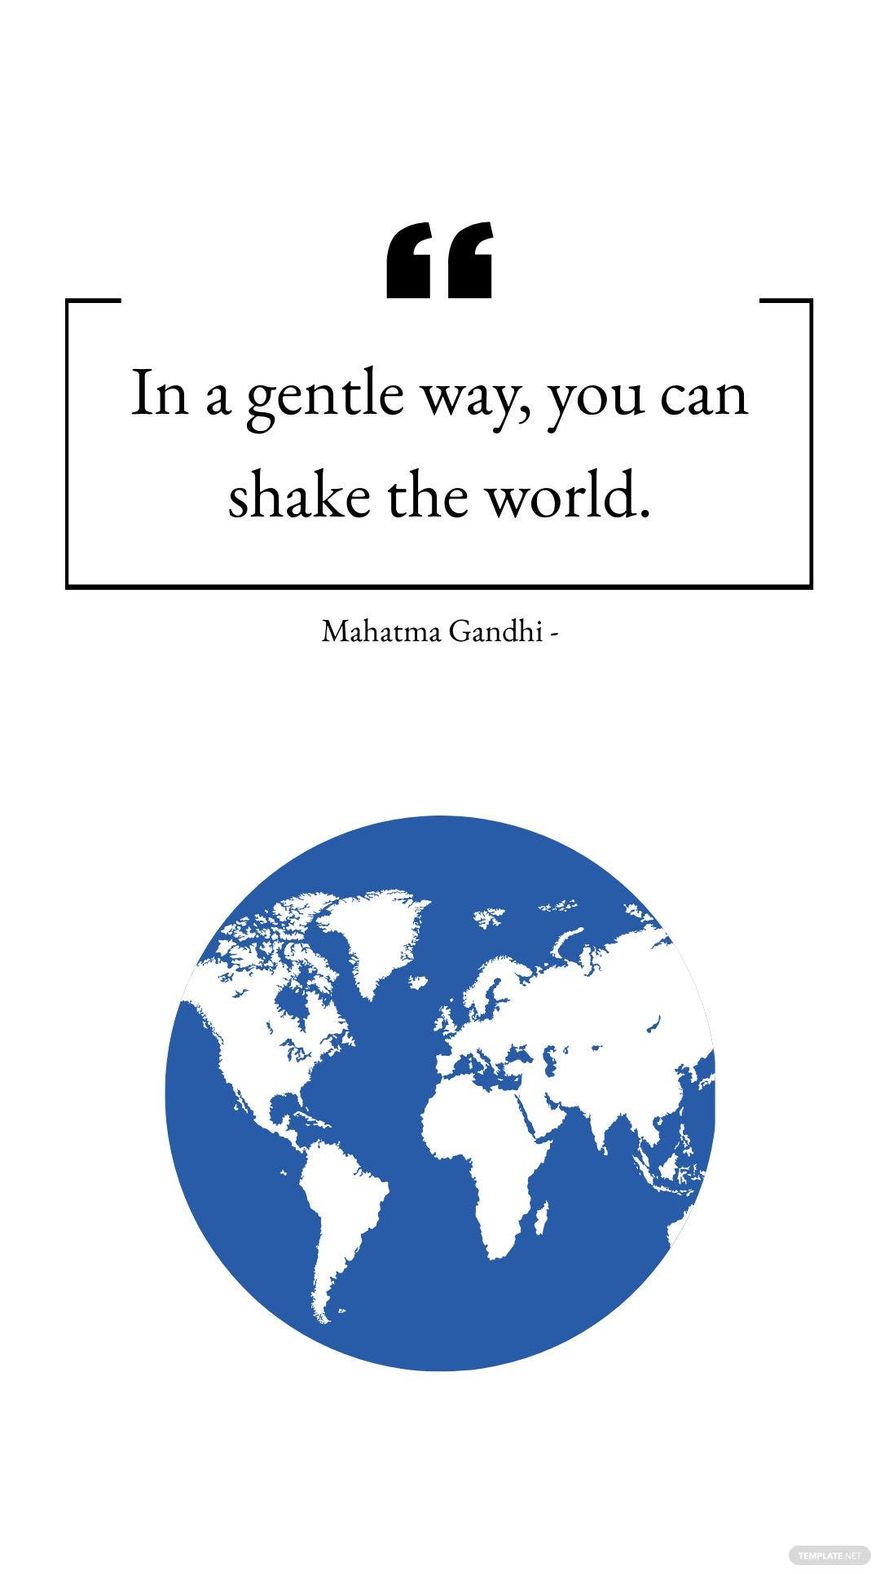 Mahatma Gandhi - In a gentle way, you can shake the world.